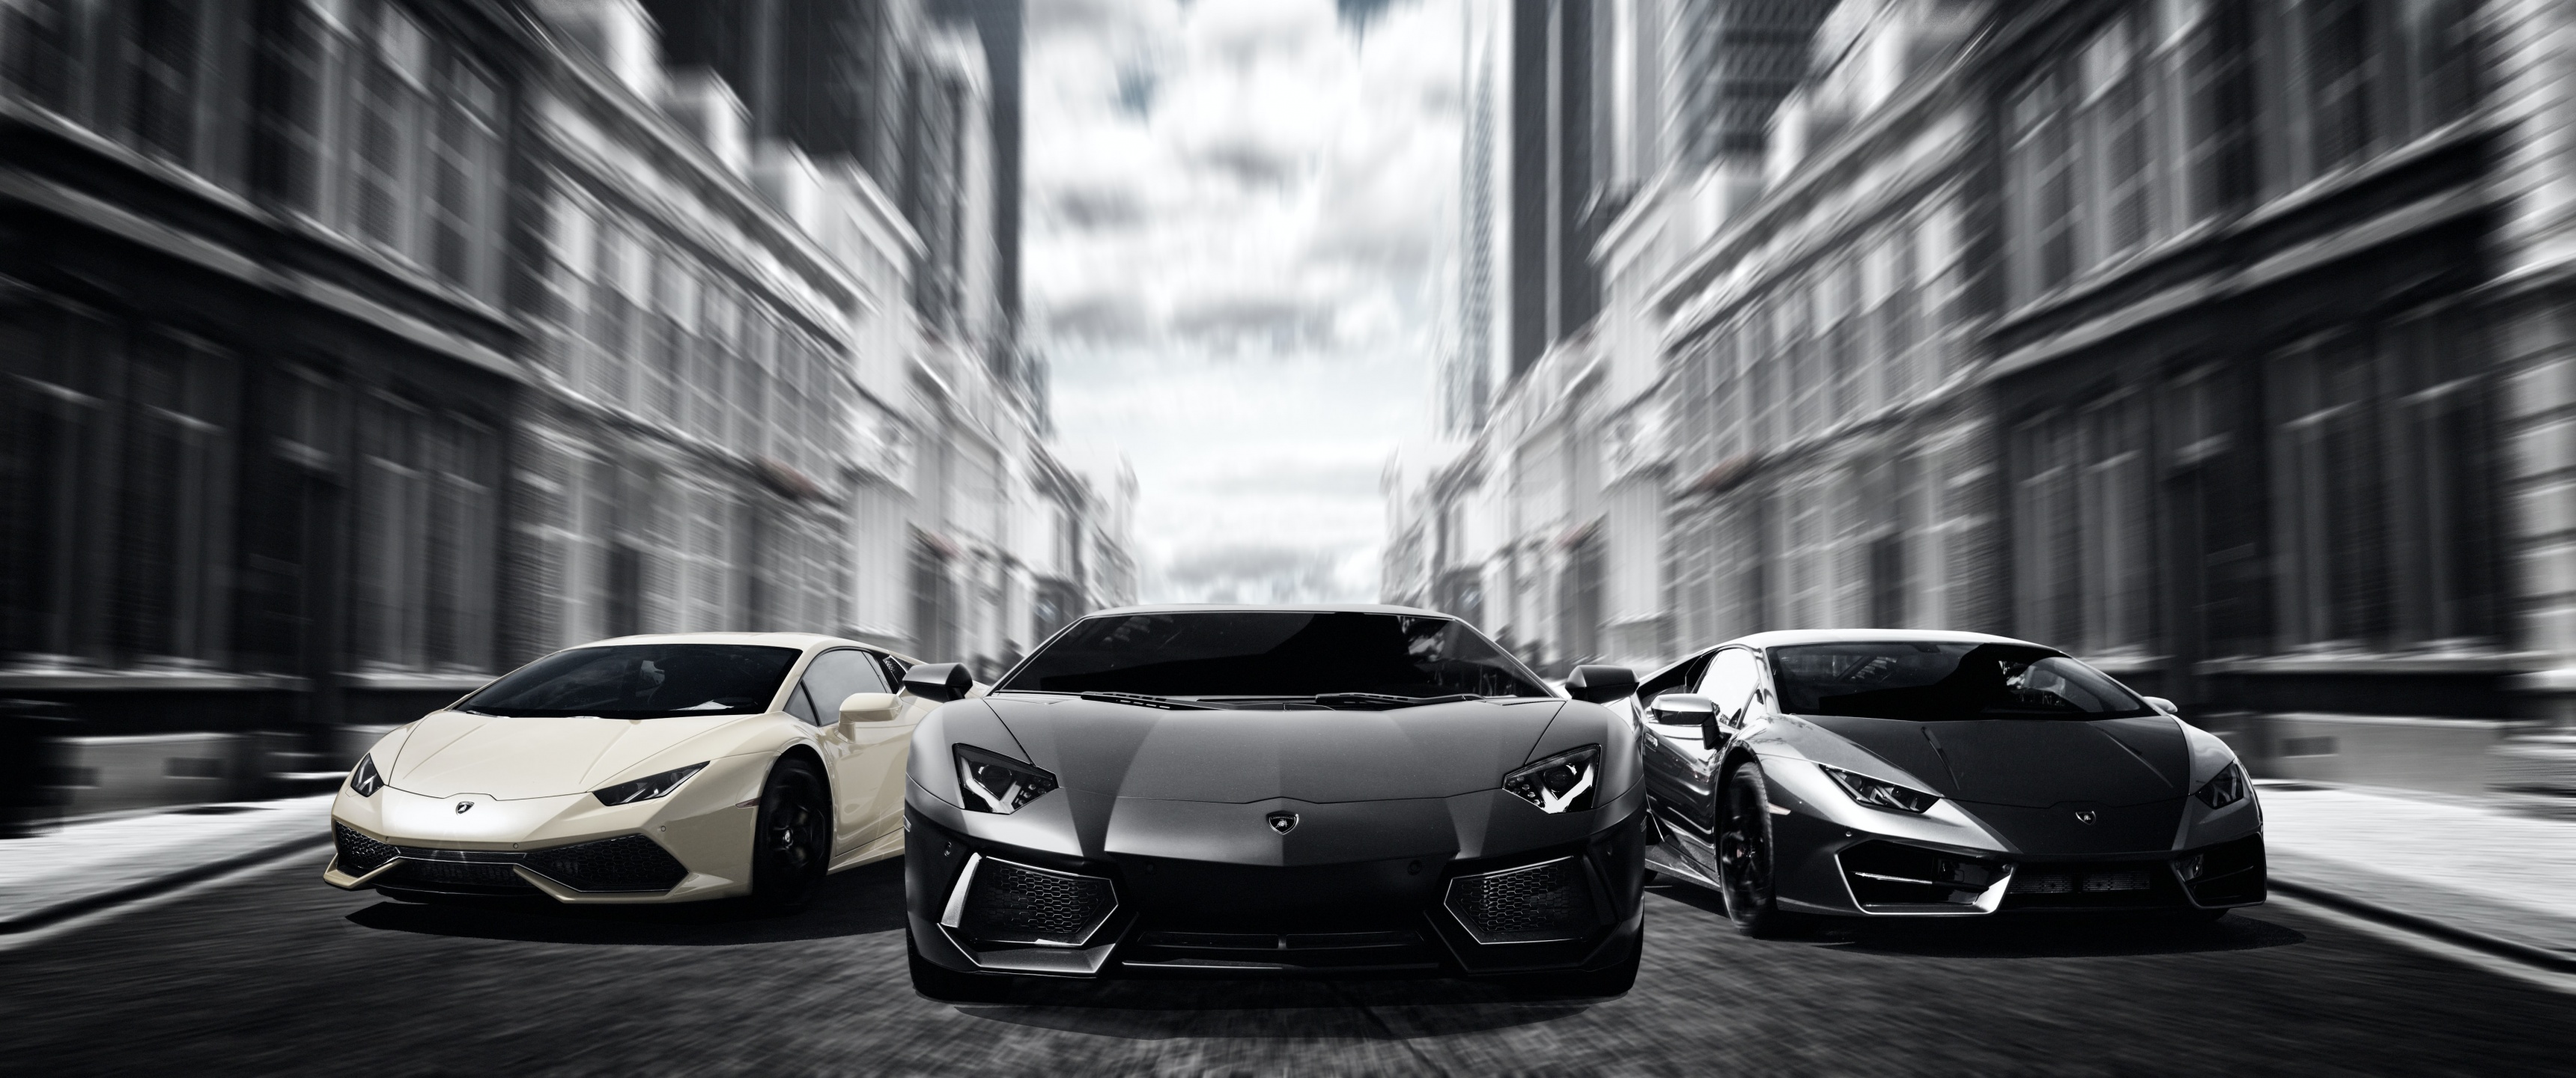 Lamborghini Cars Wallpaper 4K, Sports Cars, Luxury Cars, Automobile, Speed, 5K, Black Dark